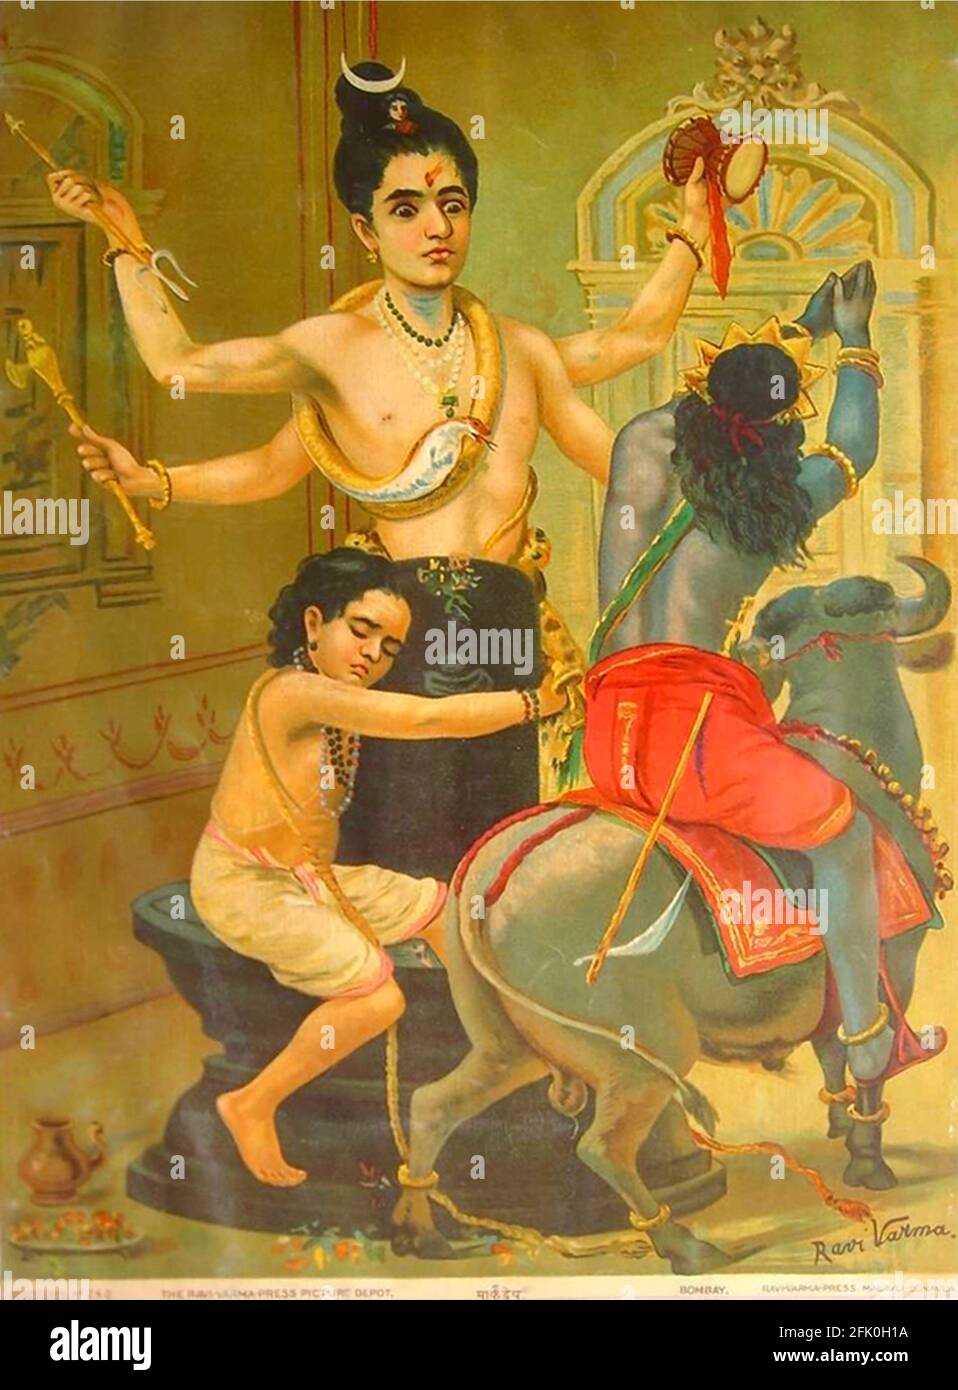 Raja Ravi Varma artwork entitled Markendeya. Stock Photo